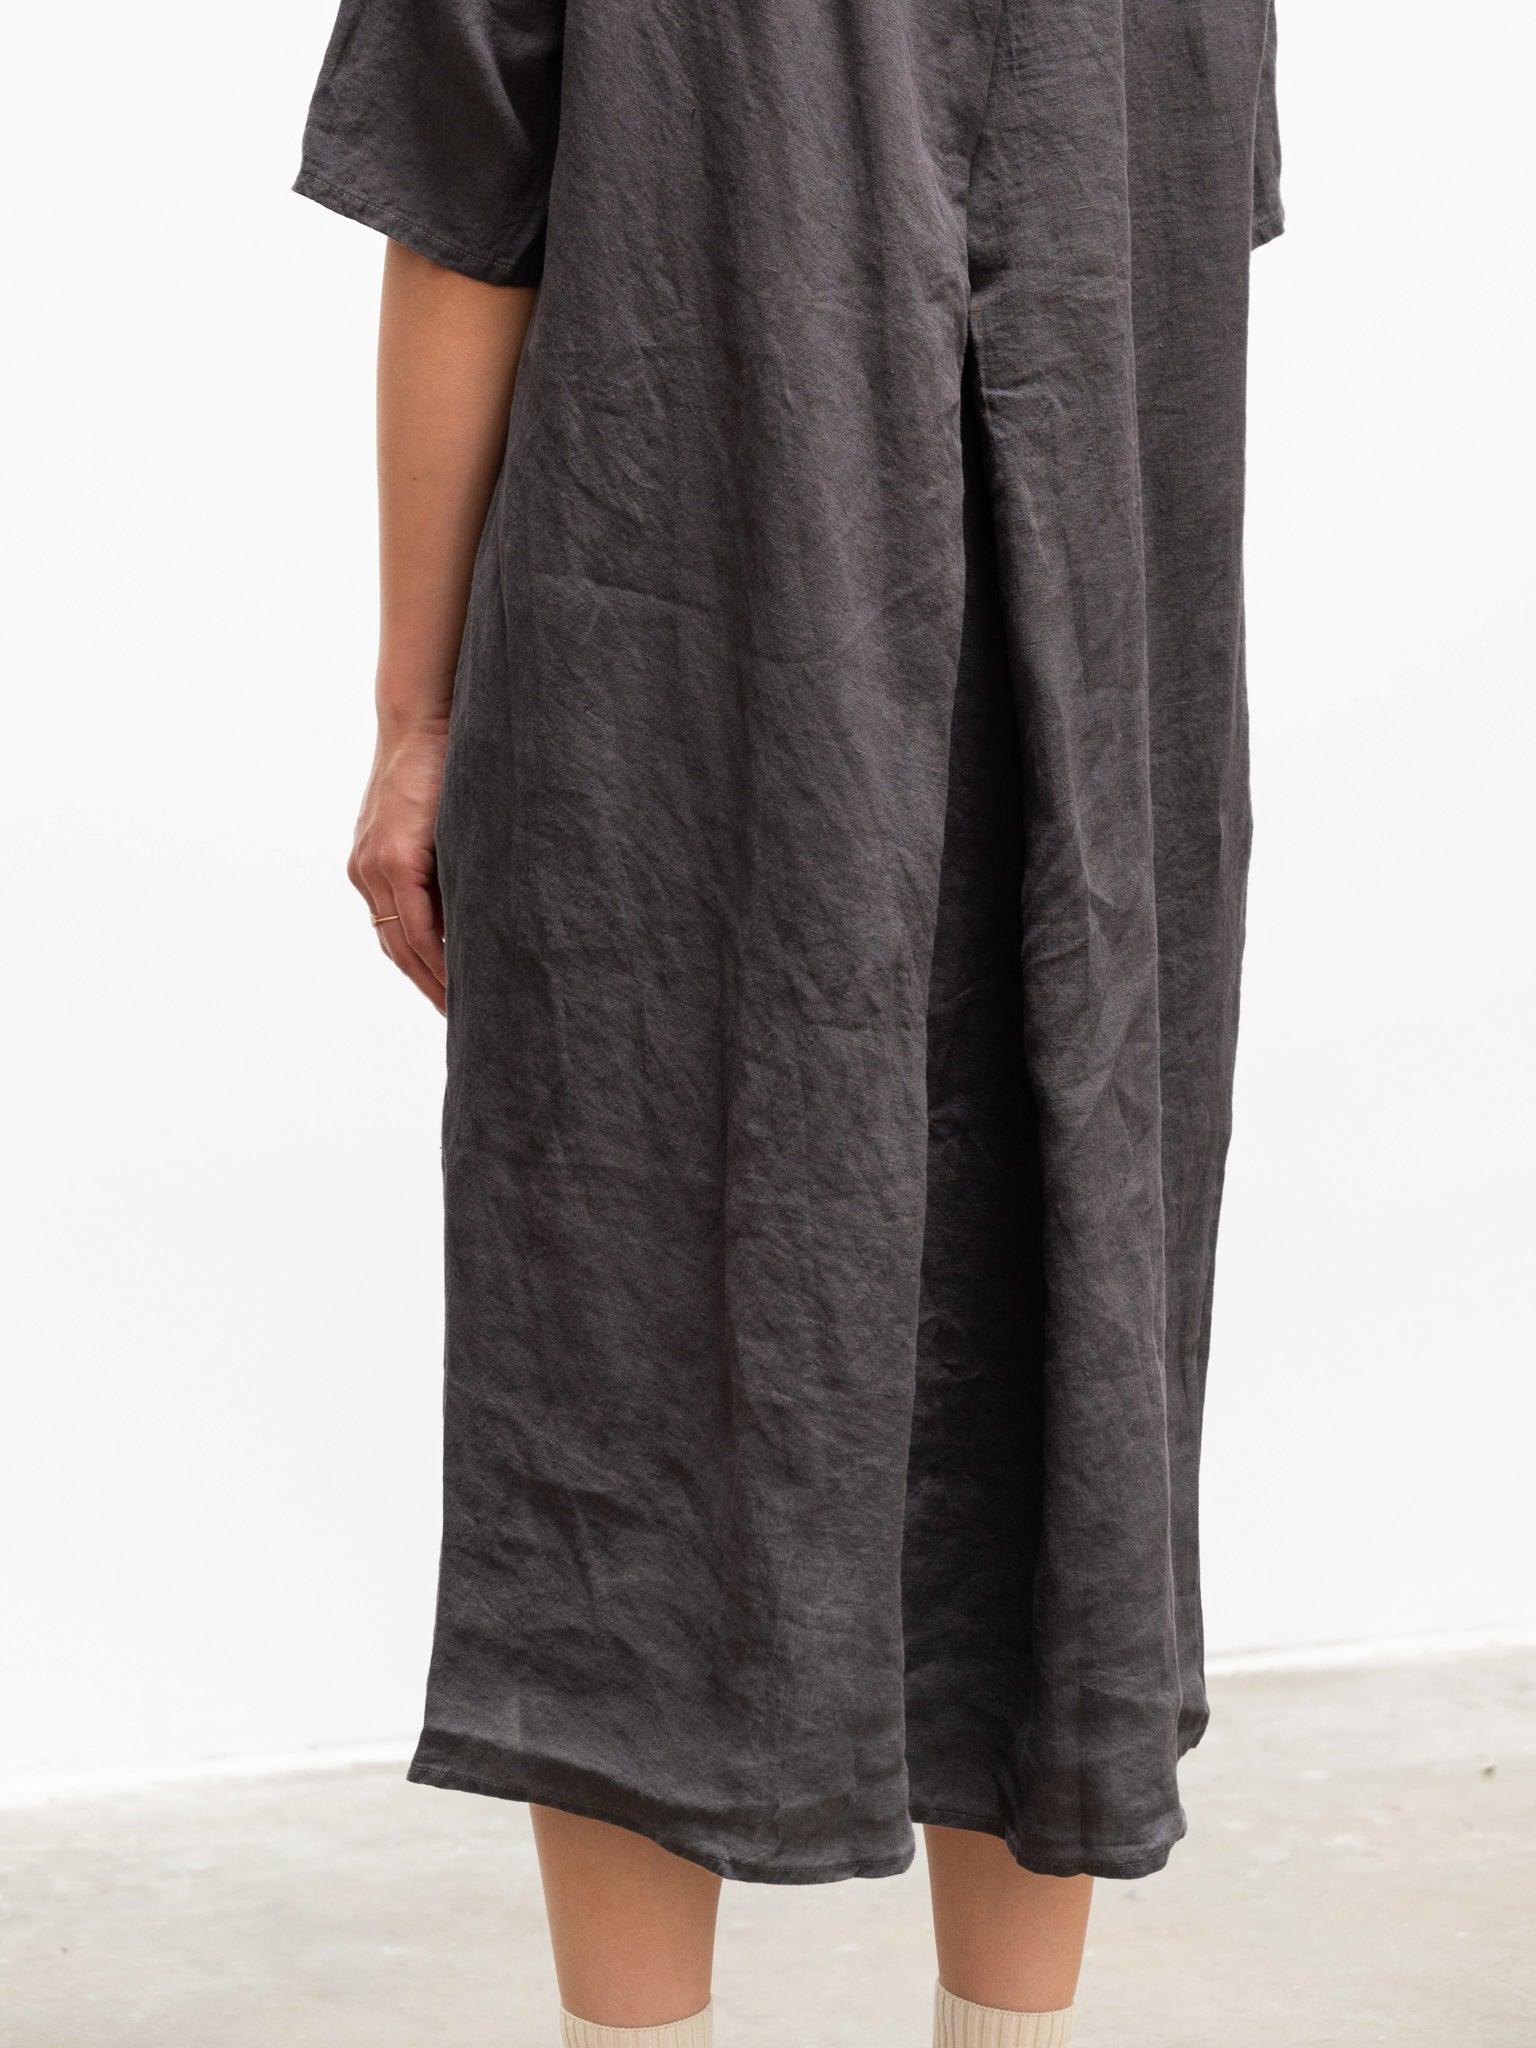 Namu Shop - Maillot Linen Back Tuck Dress - Smoke Gray